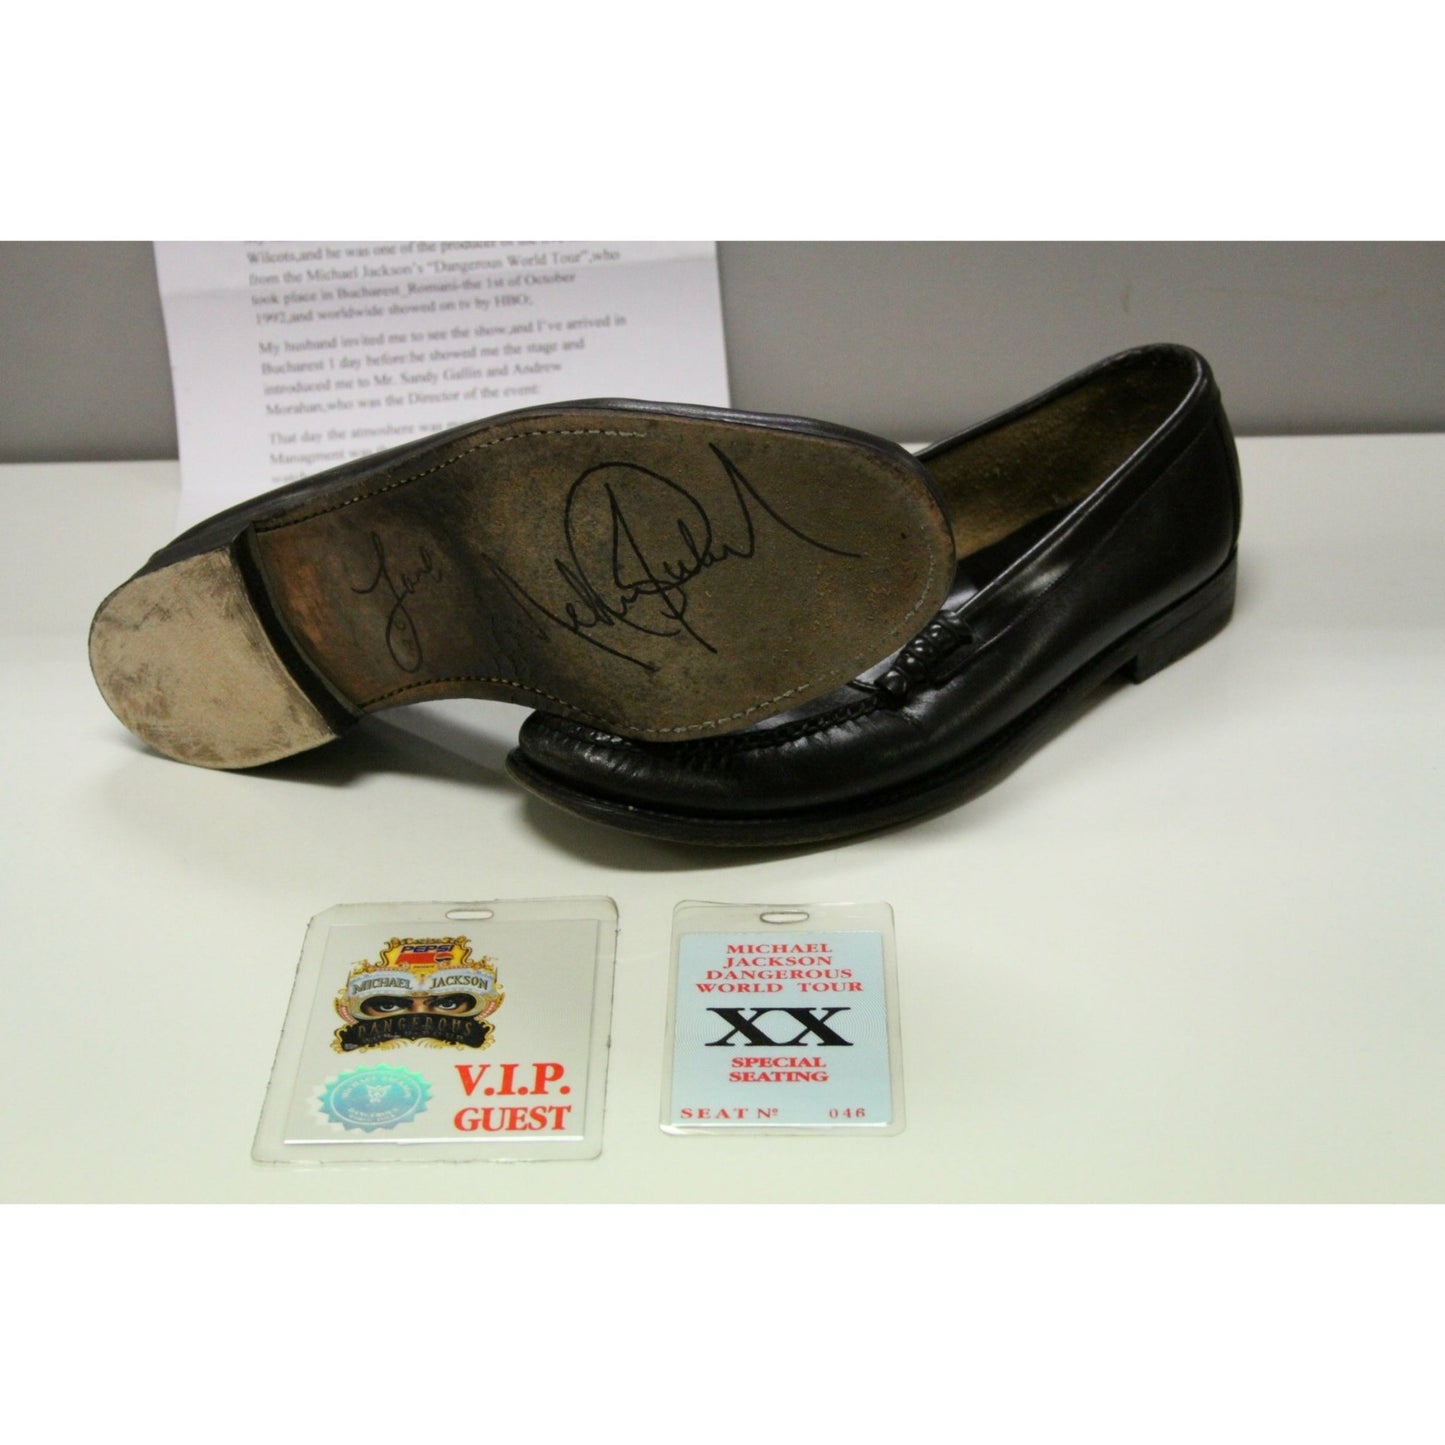 Michael Jackson memorabilia - owned, stage worn, autographed shoes - The Memorabilia Club